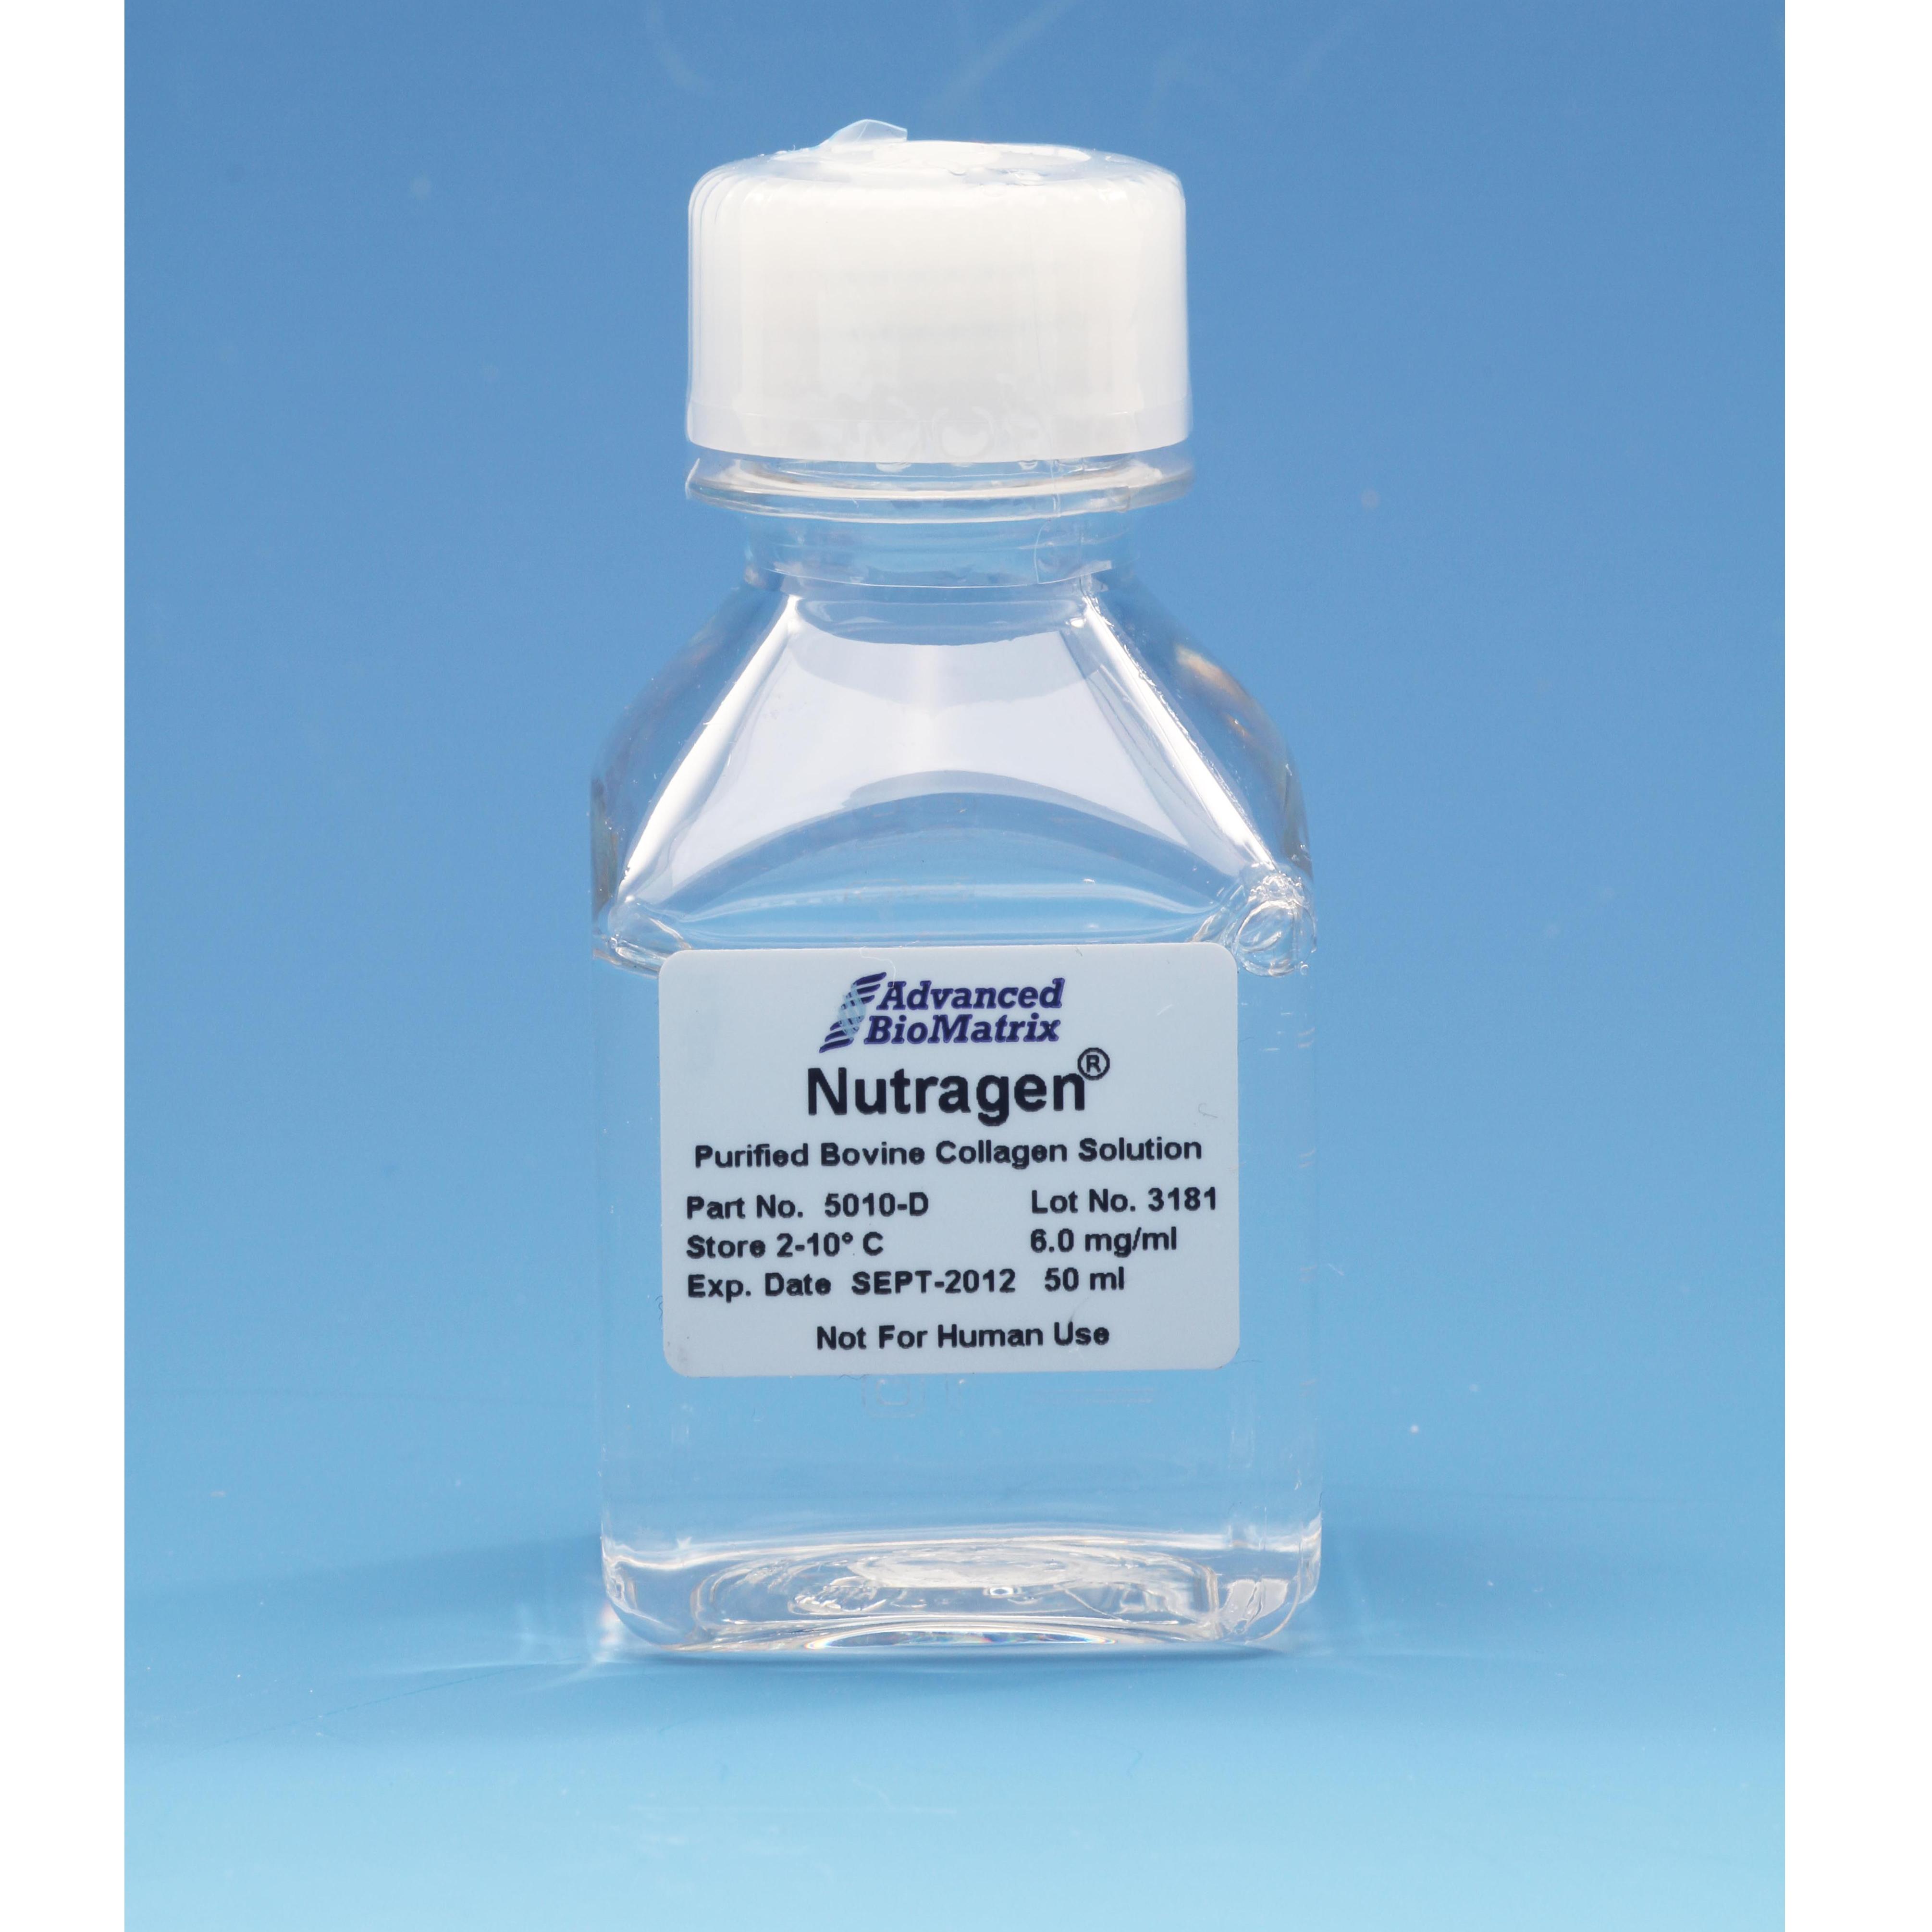 Nutragen type I collagen 6 mg/ml from Advanced BioMatrix